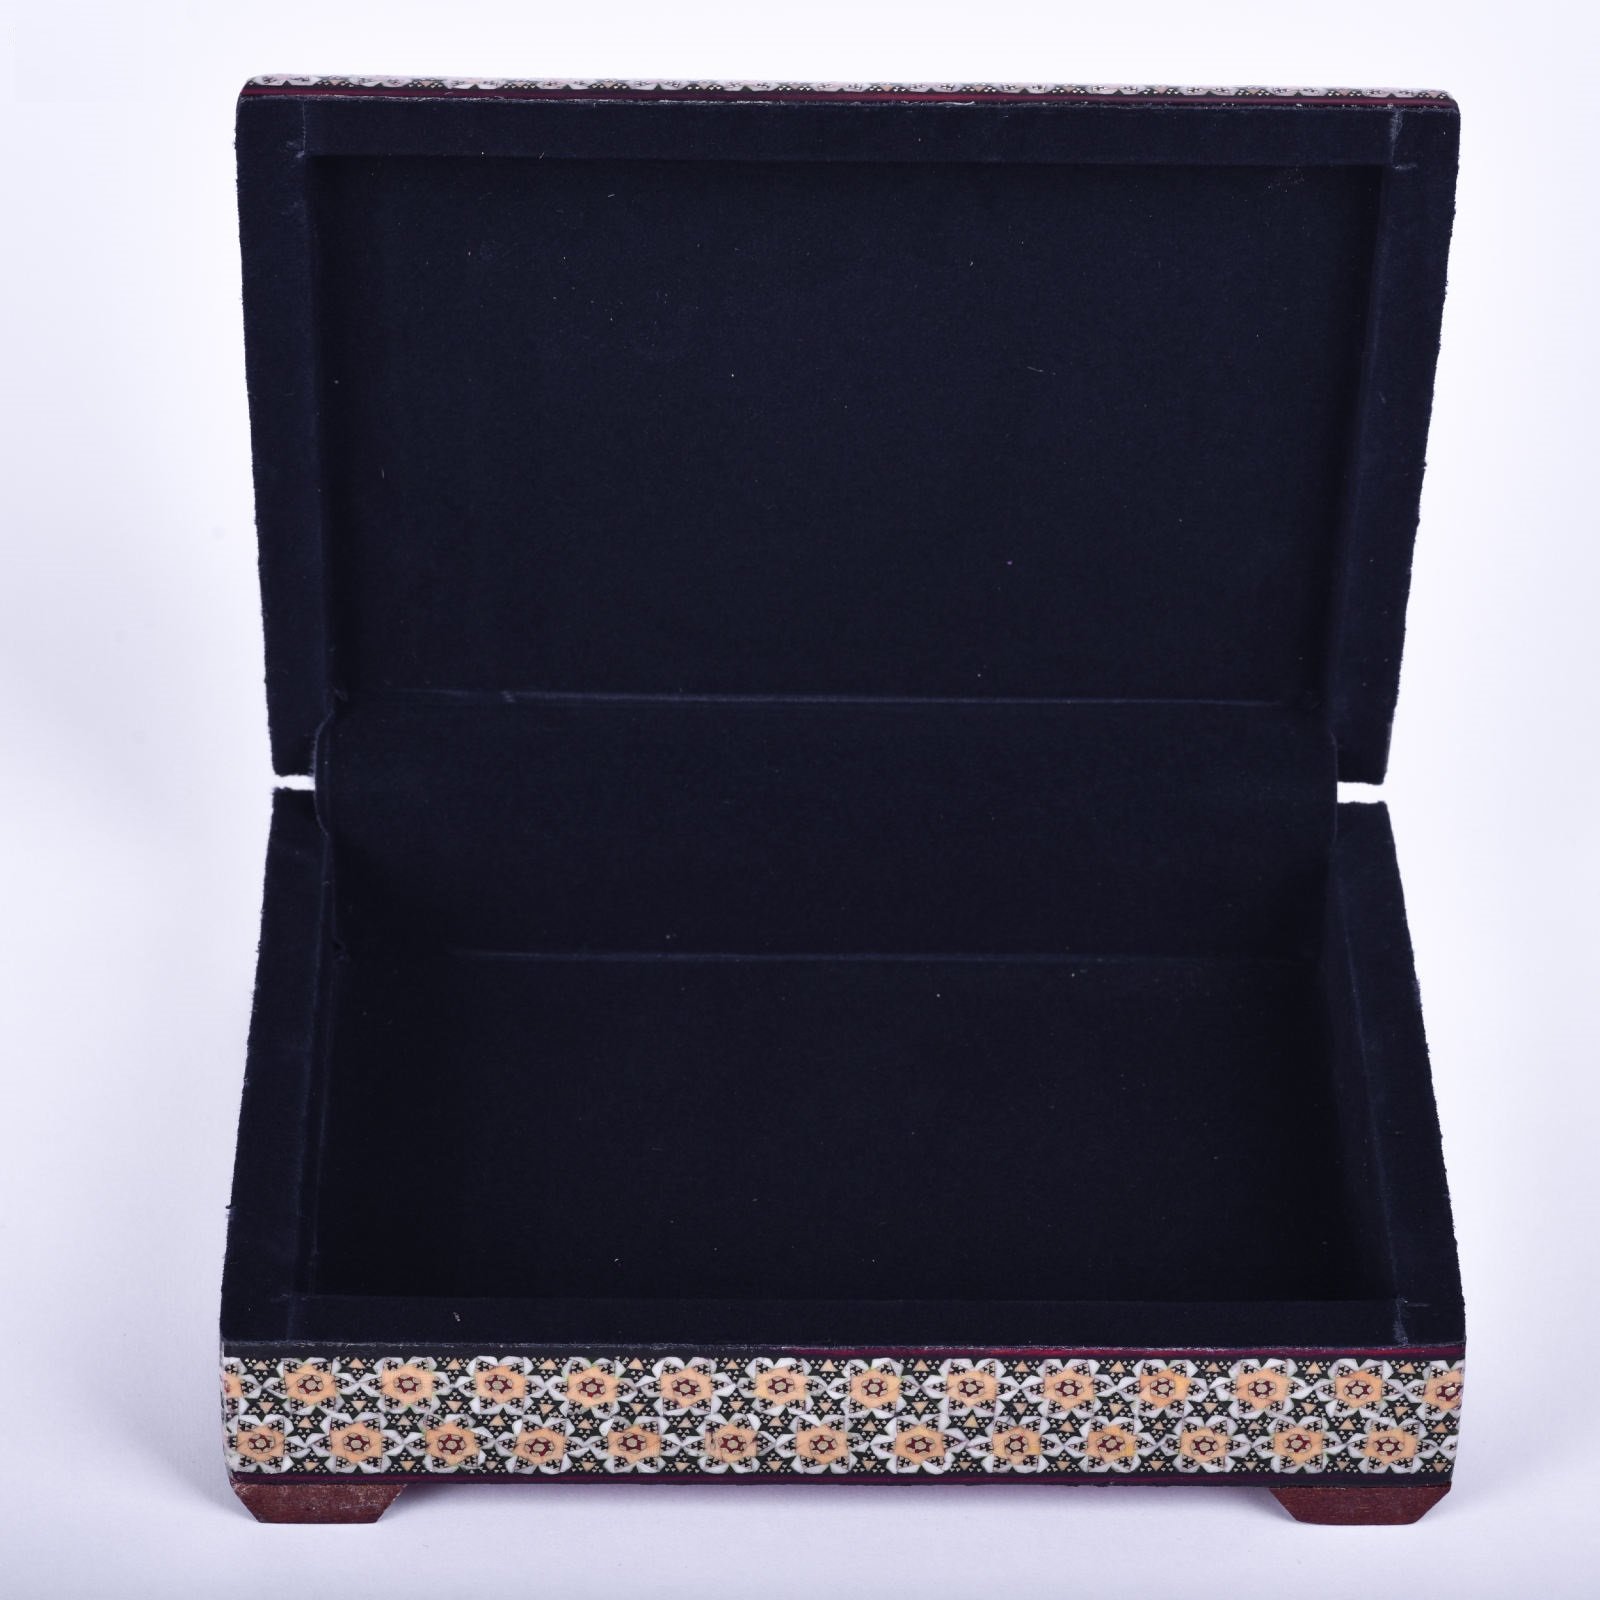 Khatam Pencil Case Bird Design Code 2015 , Khatam, Inlaid, Khatam Pencil Case Model, Khatam